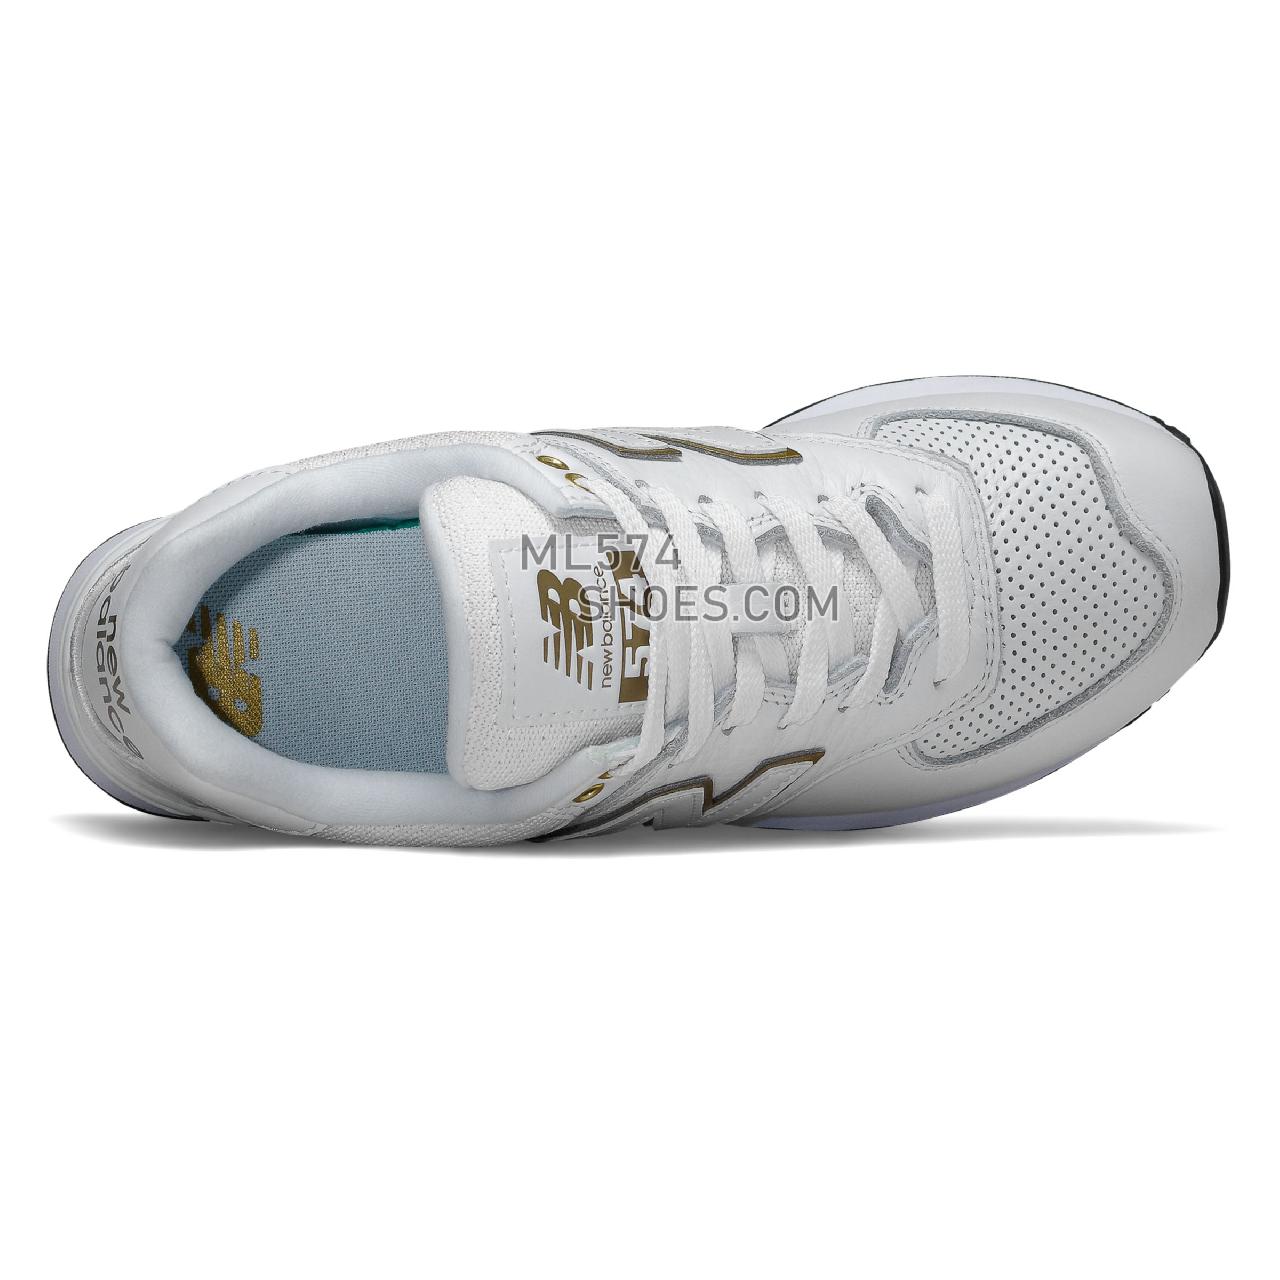 New Balance 574 - Women's Classic Sneakers - White with Metallic Gold - WL574LDE